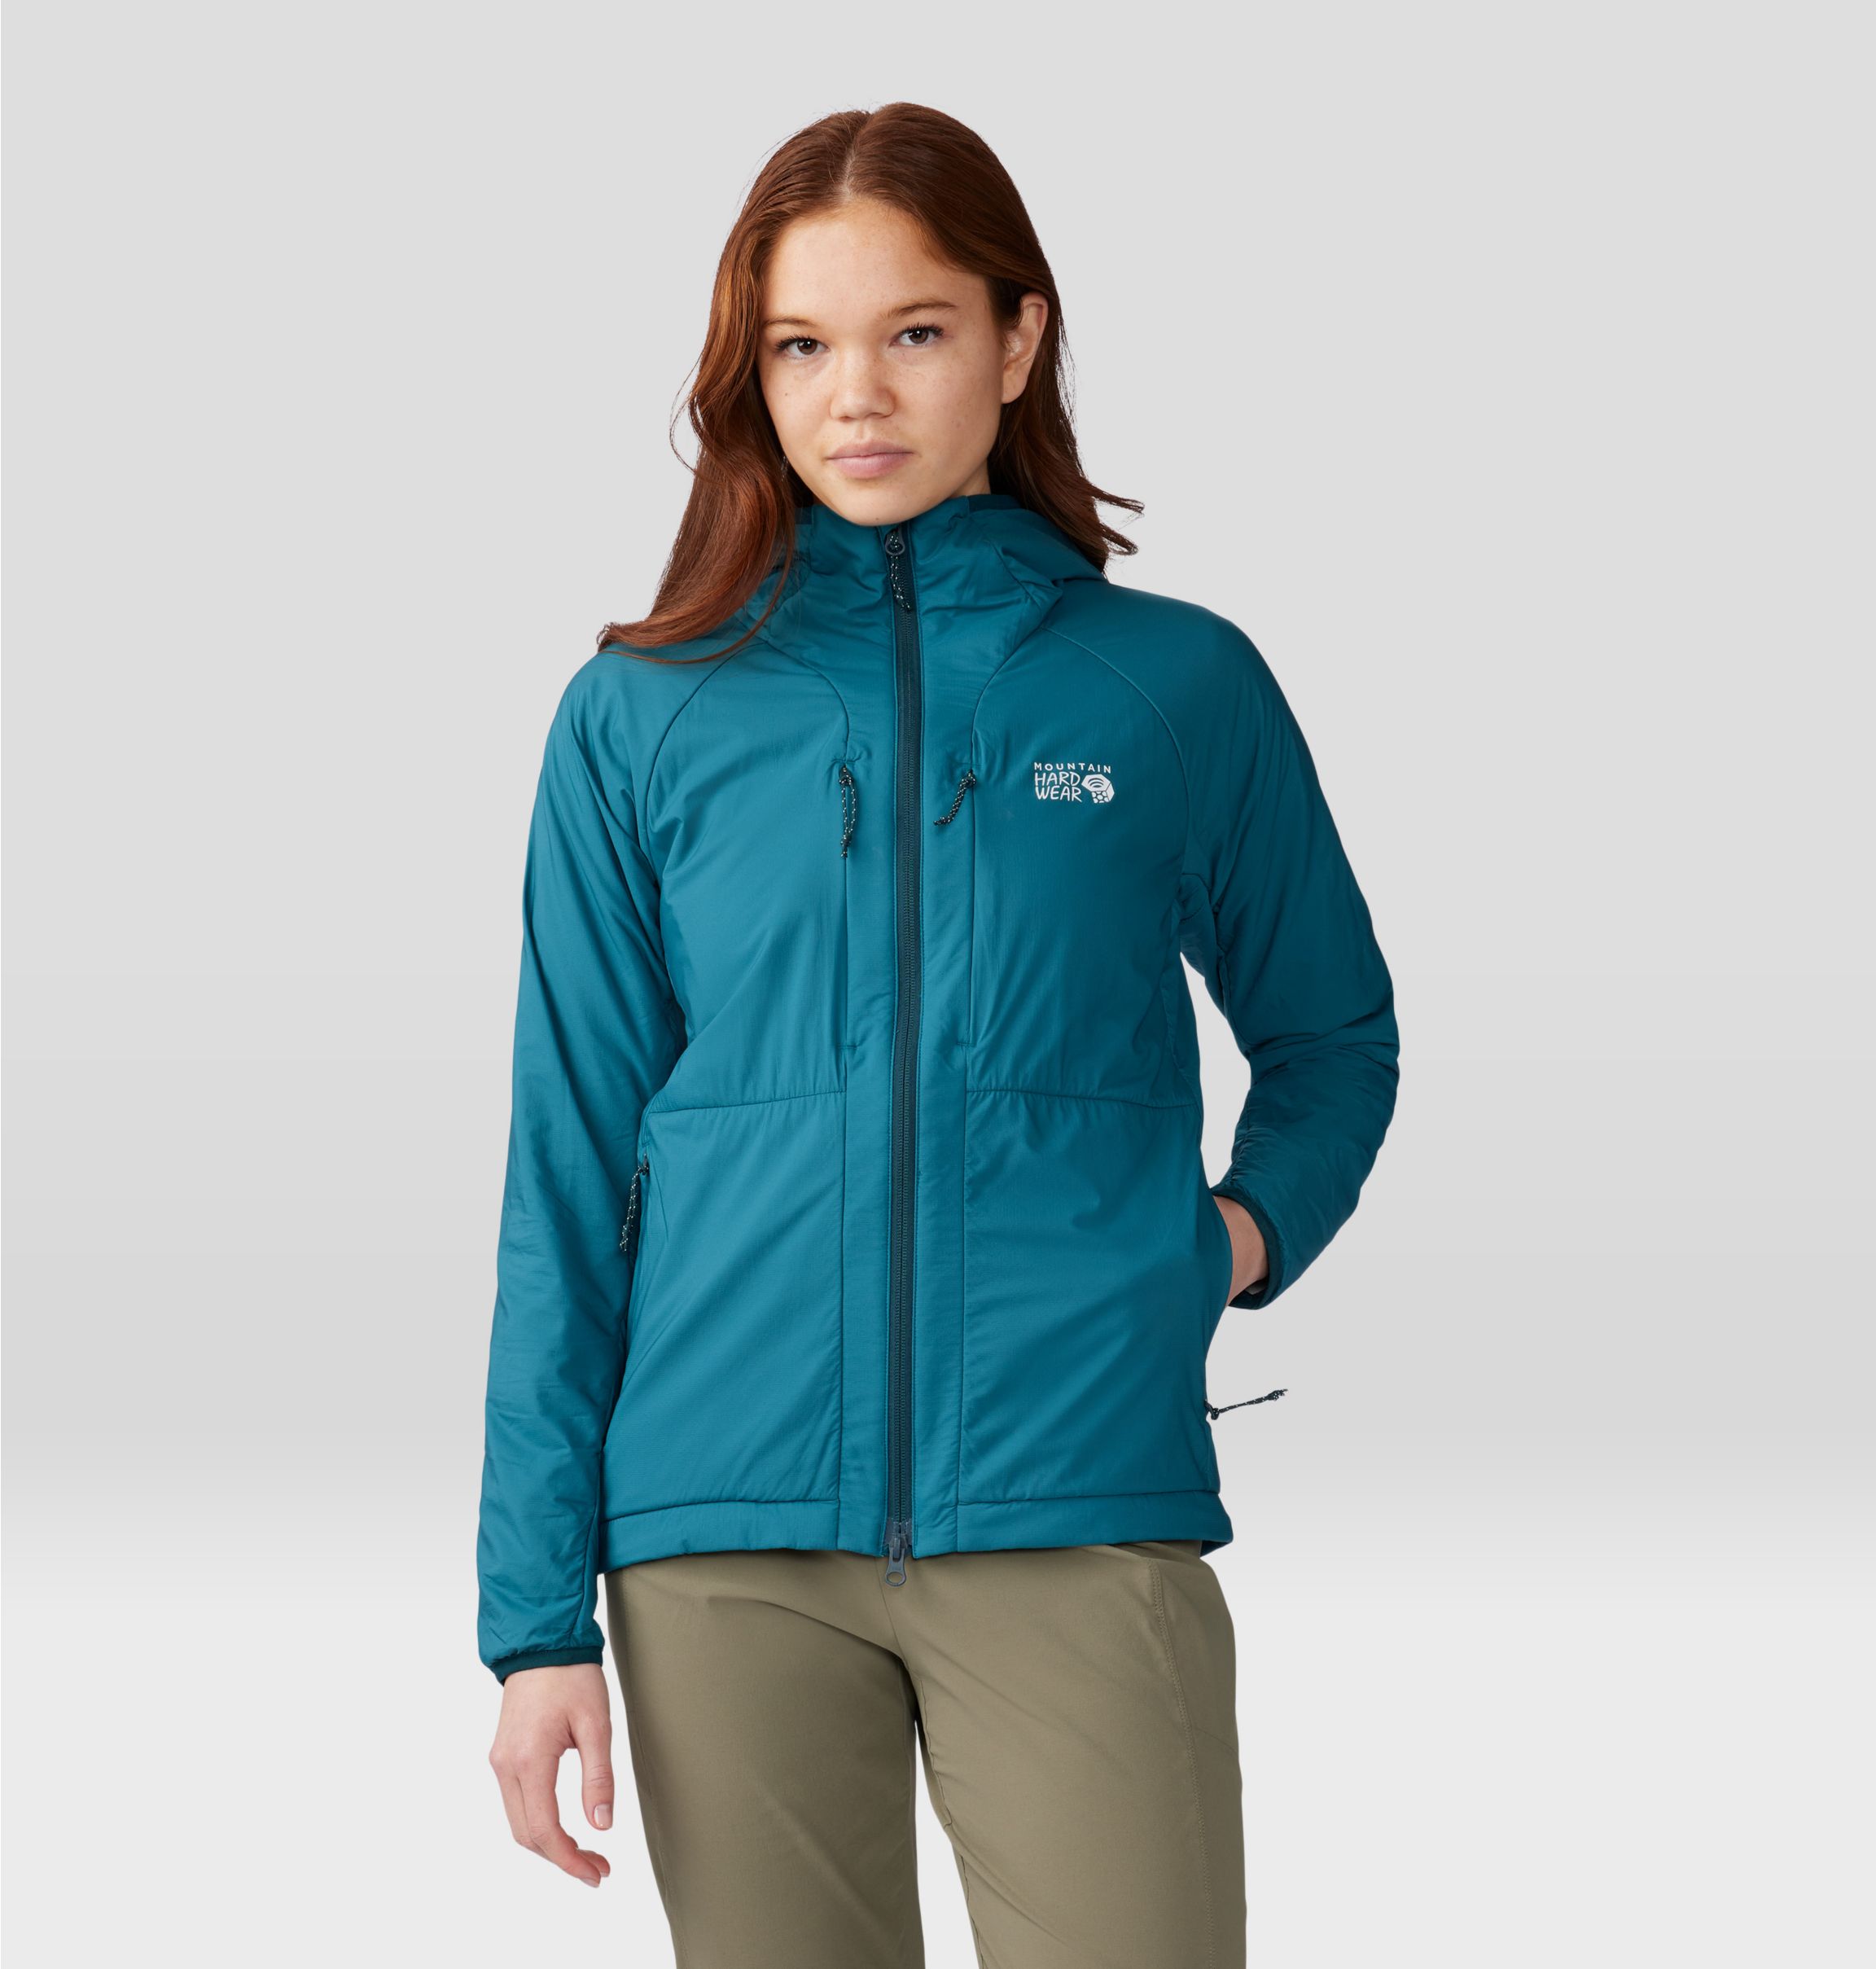 Women's Kor AirShell™ Warm Jacket | Mountain Hardwear